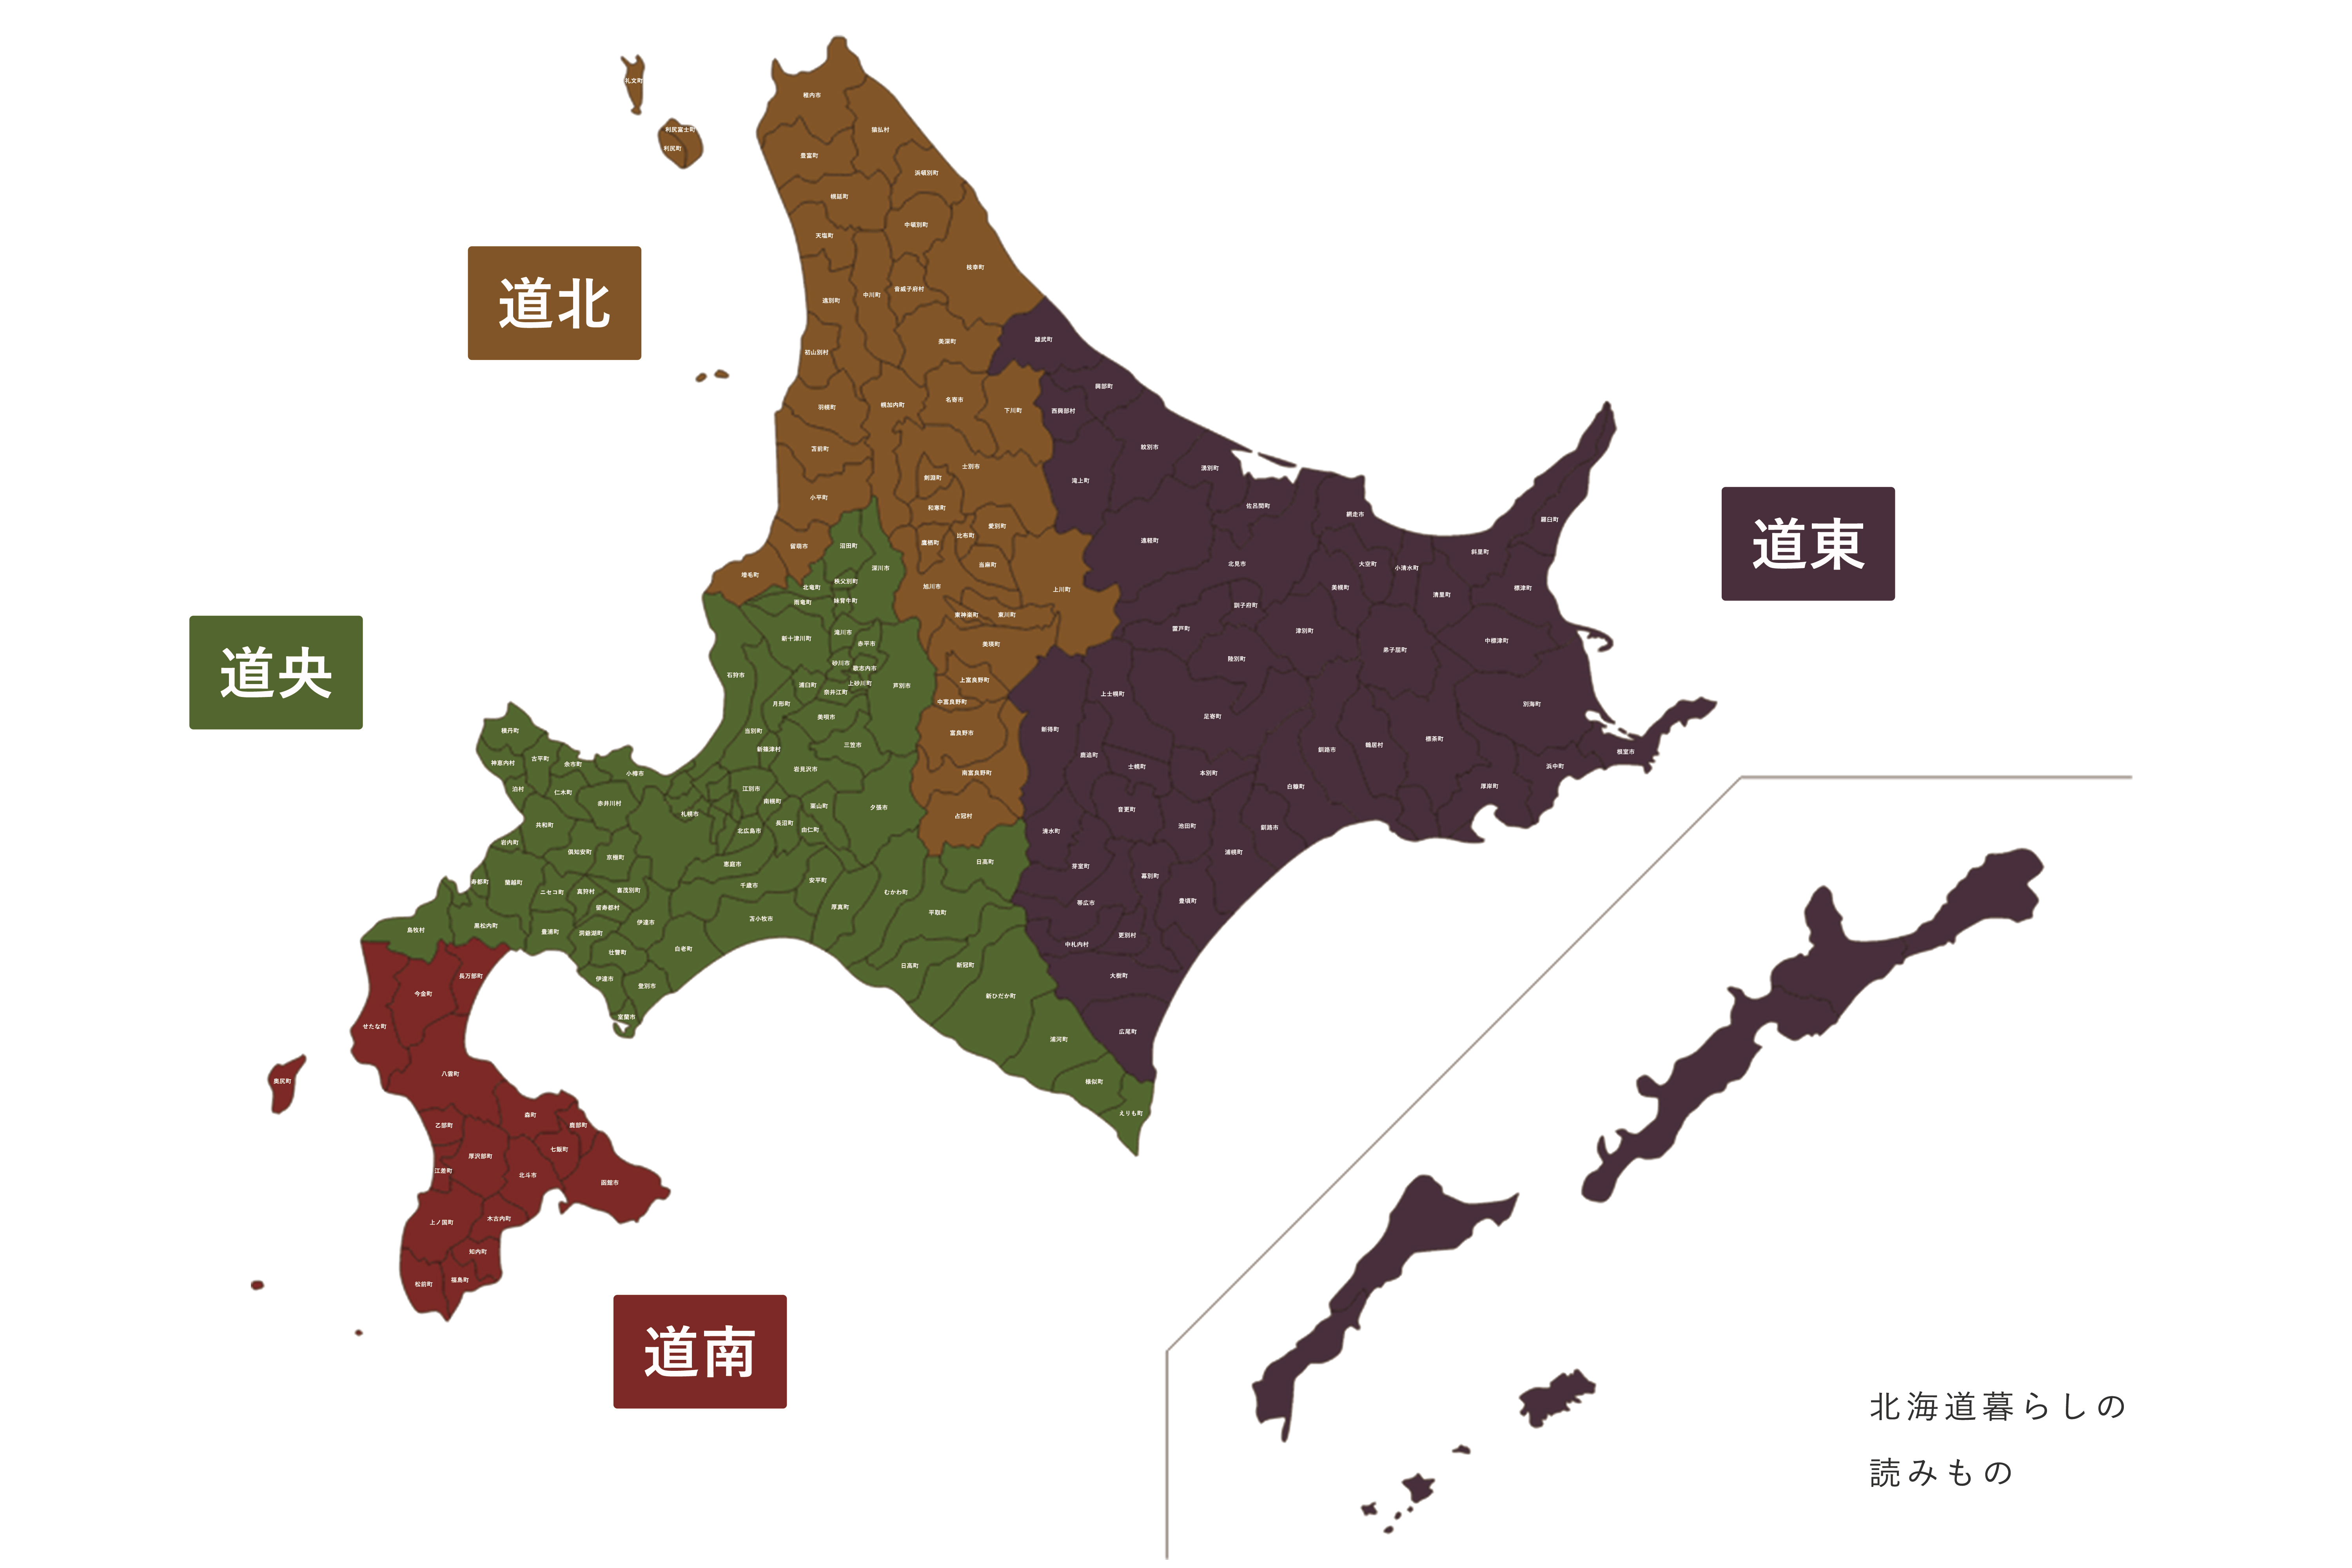 北海道のエリア区分「道央、道南、道北、道東」